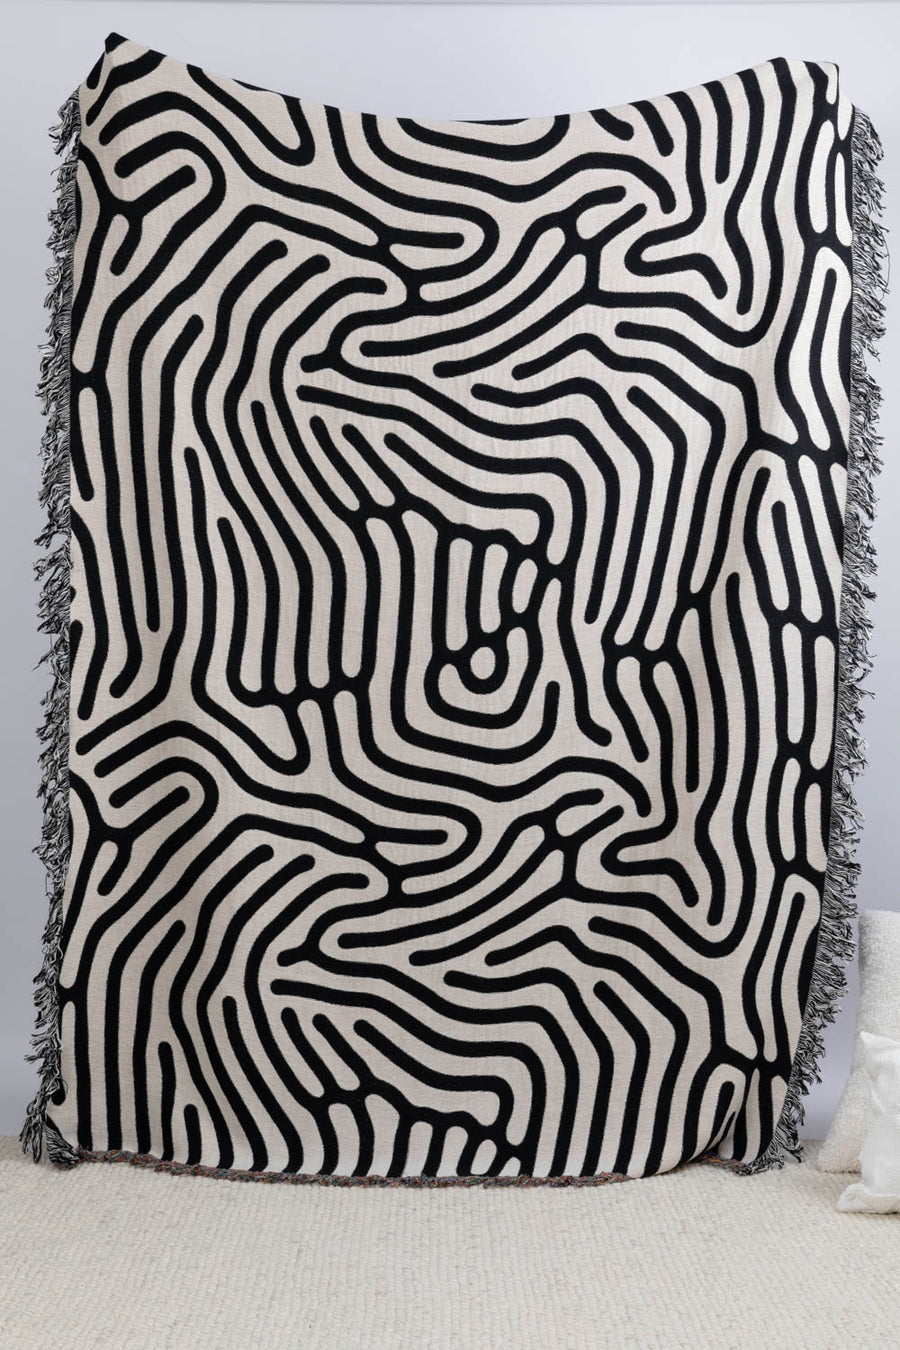 Abstract Modern Art Throw Blanket 60x80